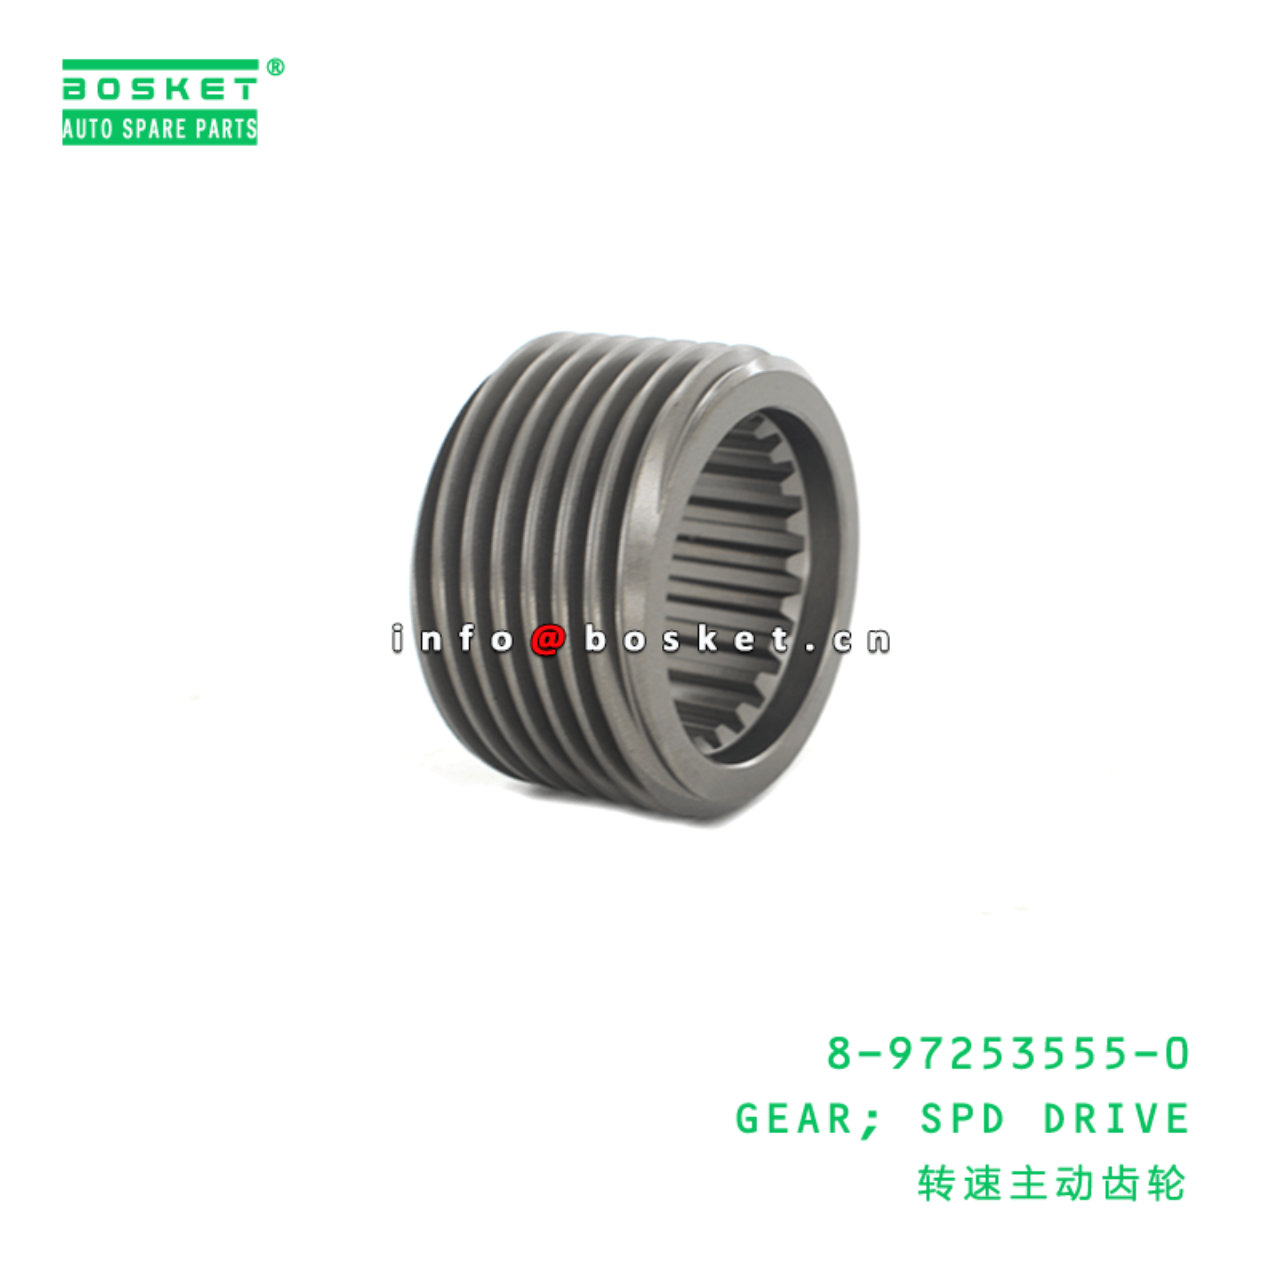 8-97253555-0 Speed Drive Gear 8972535550 Suitable for ISUZU MZZ6 